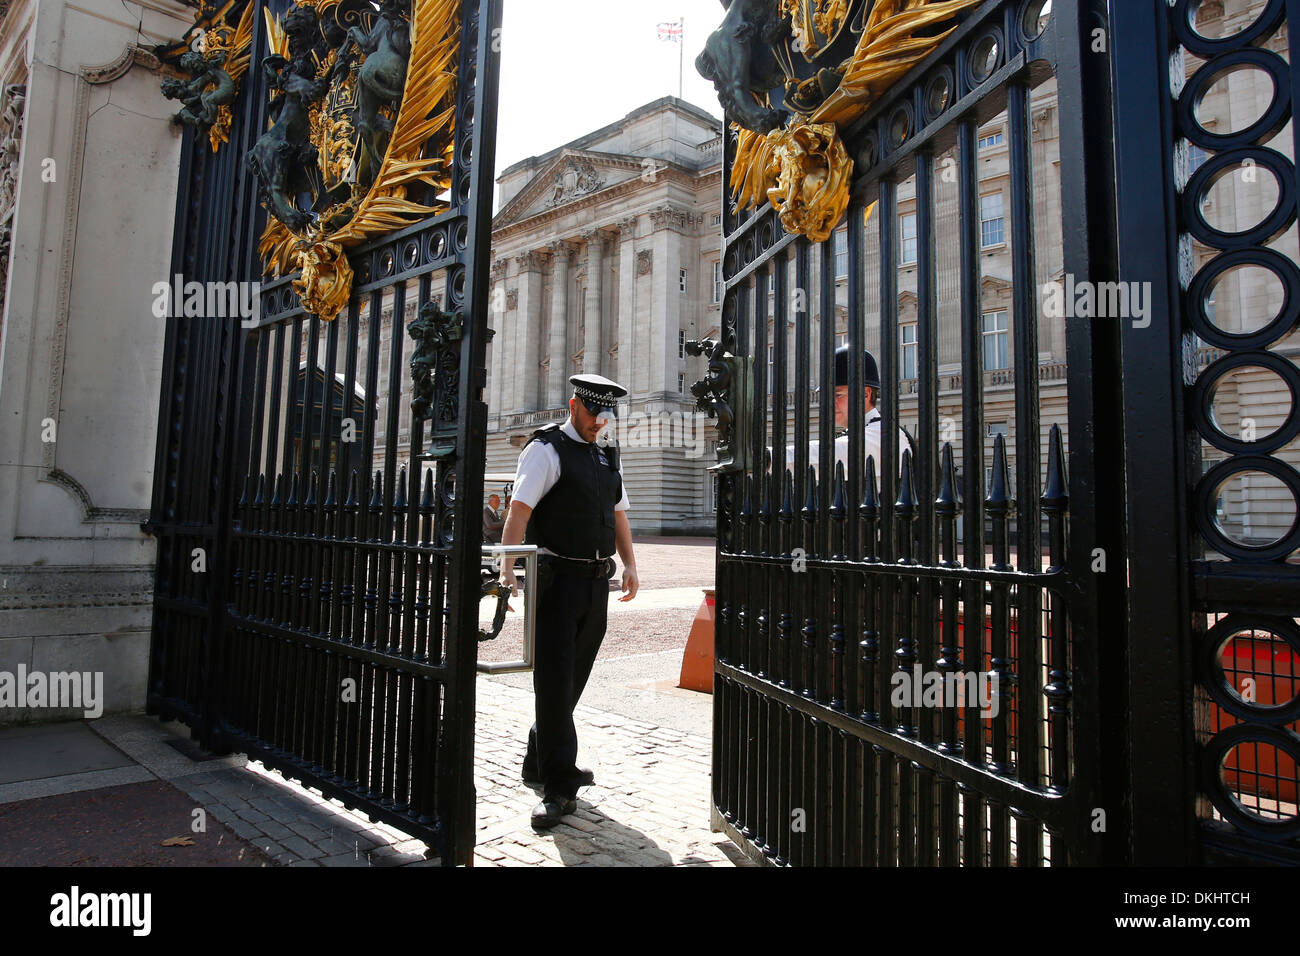 British police outside Buckingham Palace in London, Britain. Stock Photo